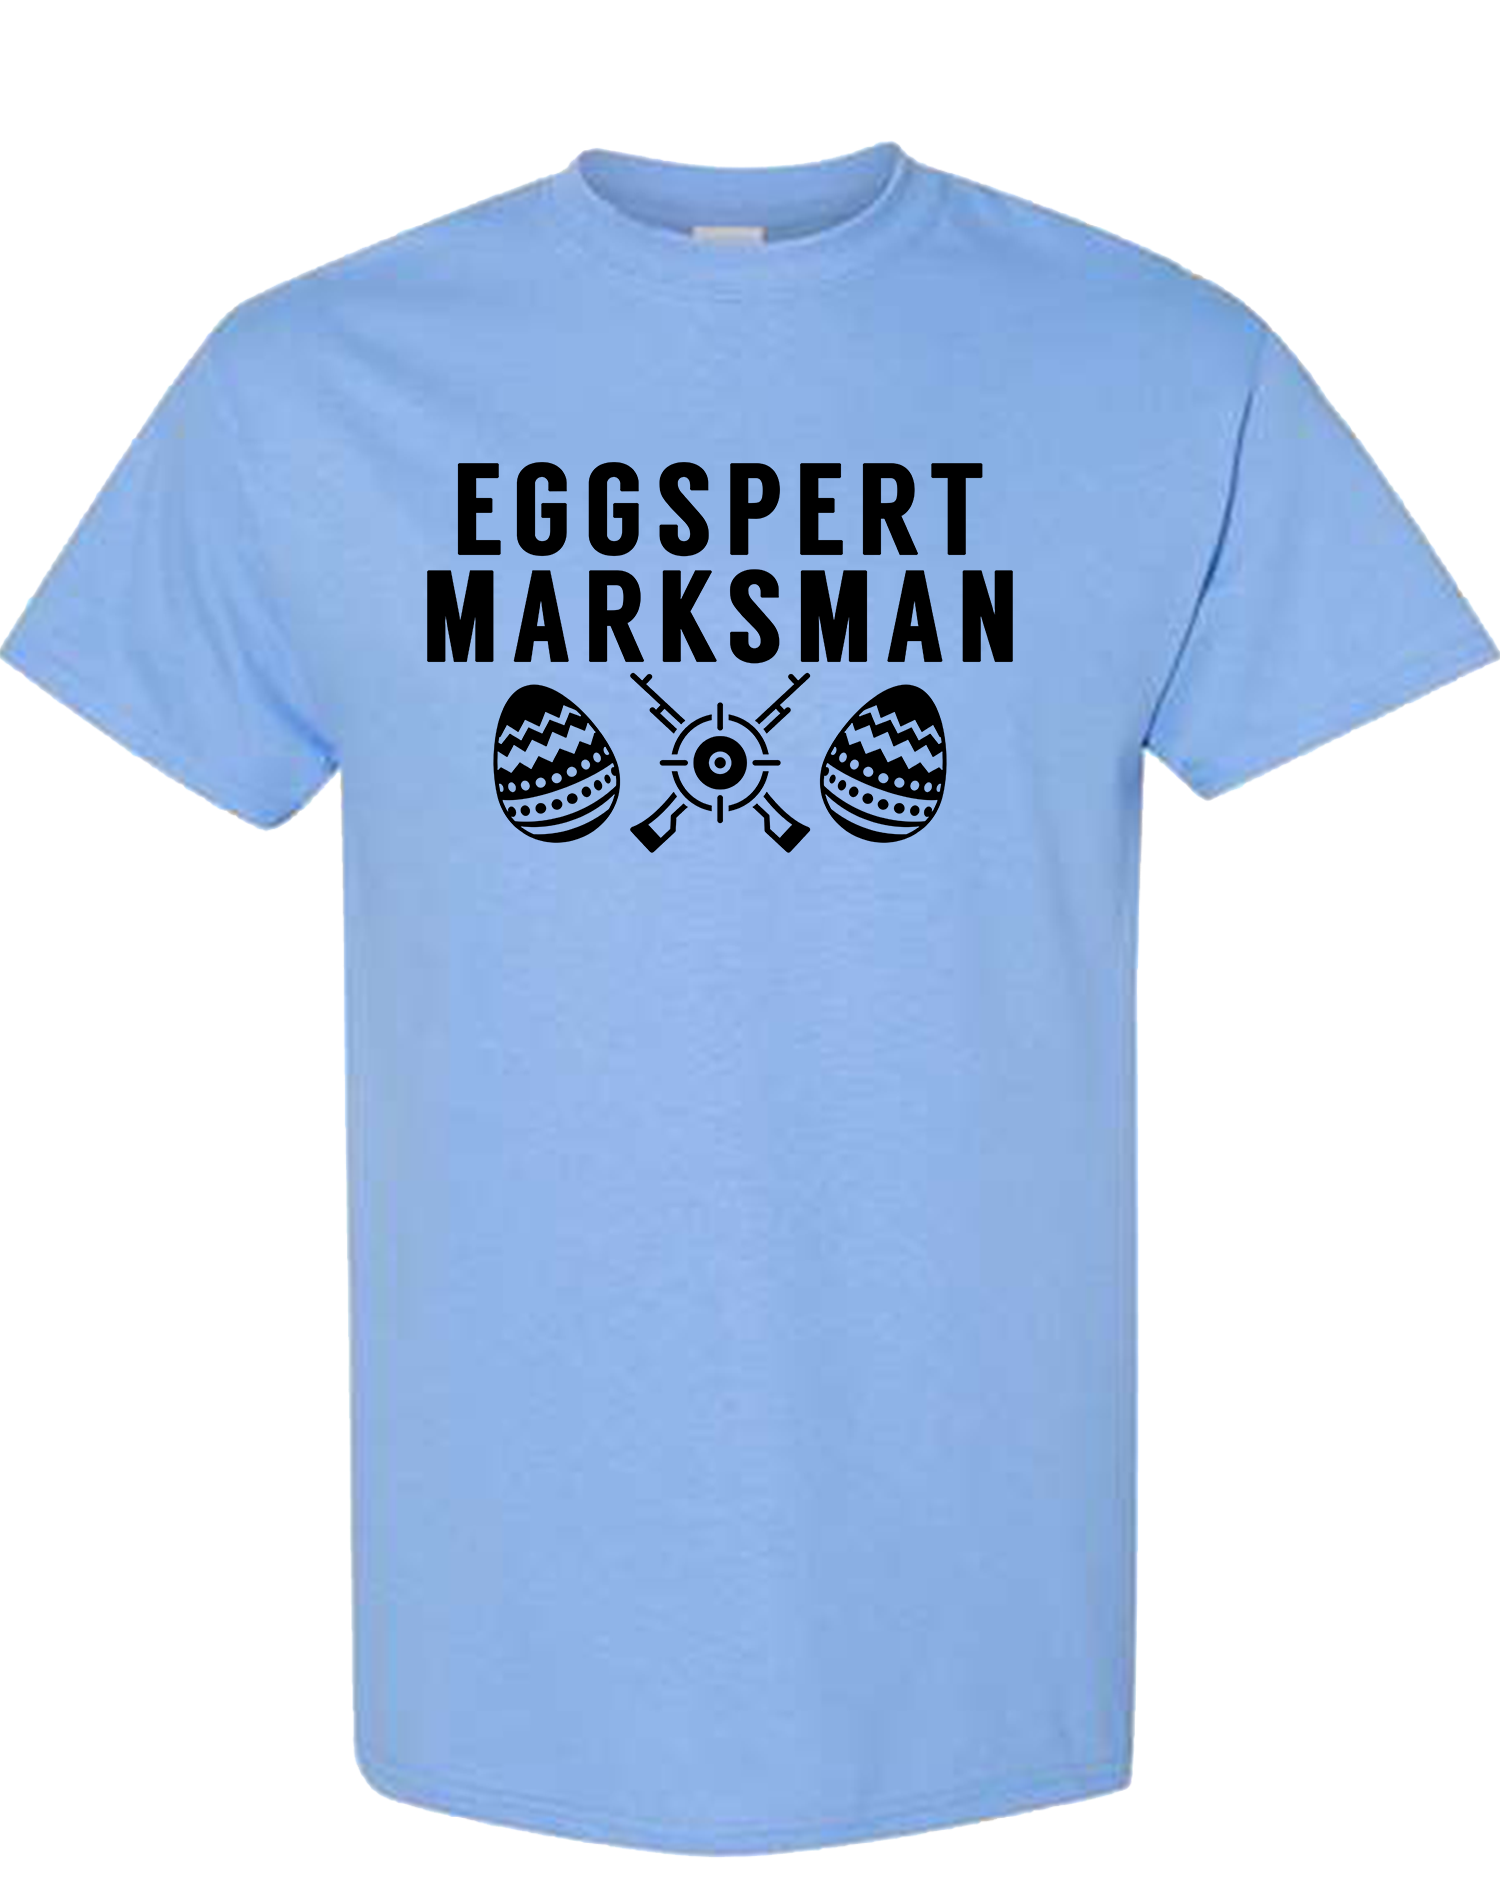 Eggspert Marksman